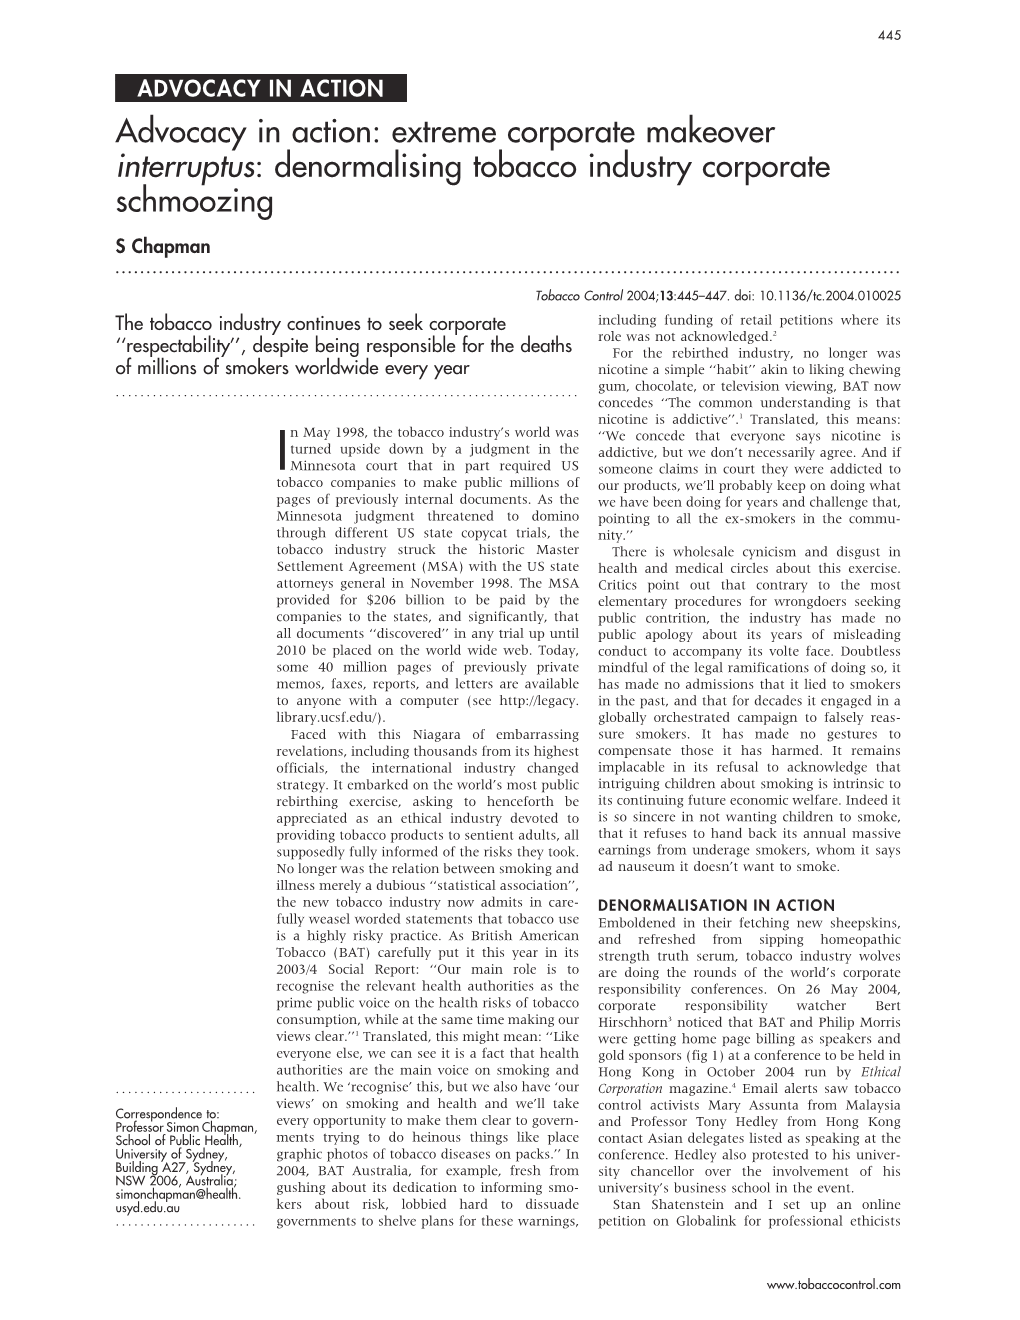 Denormalising Tobacco Industry Corporate Schmoozing S Chapman